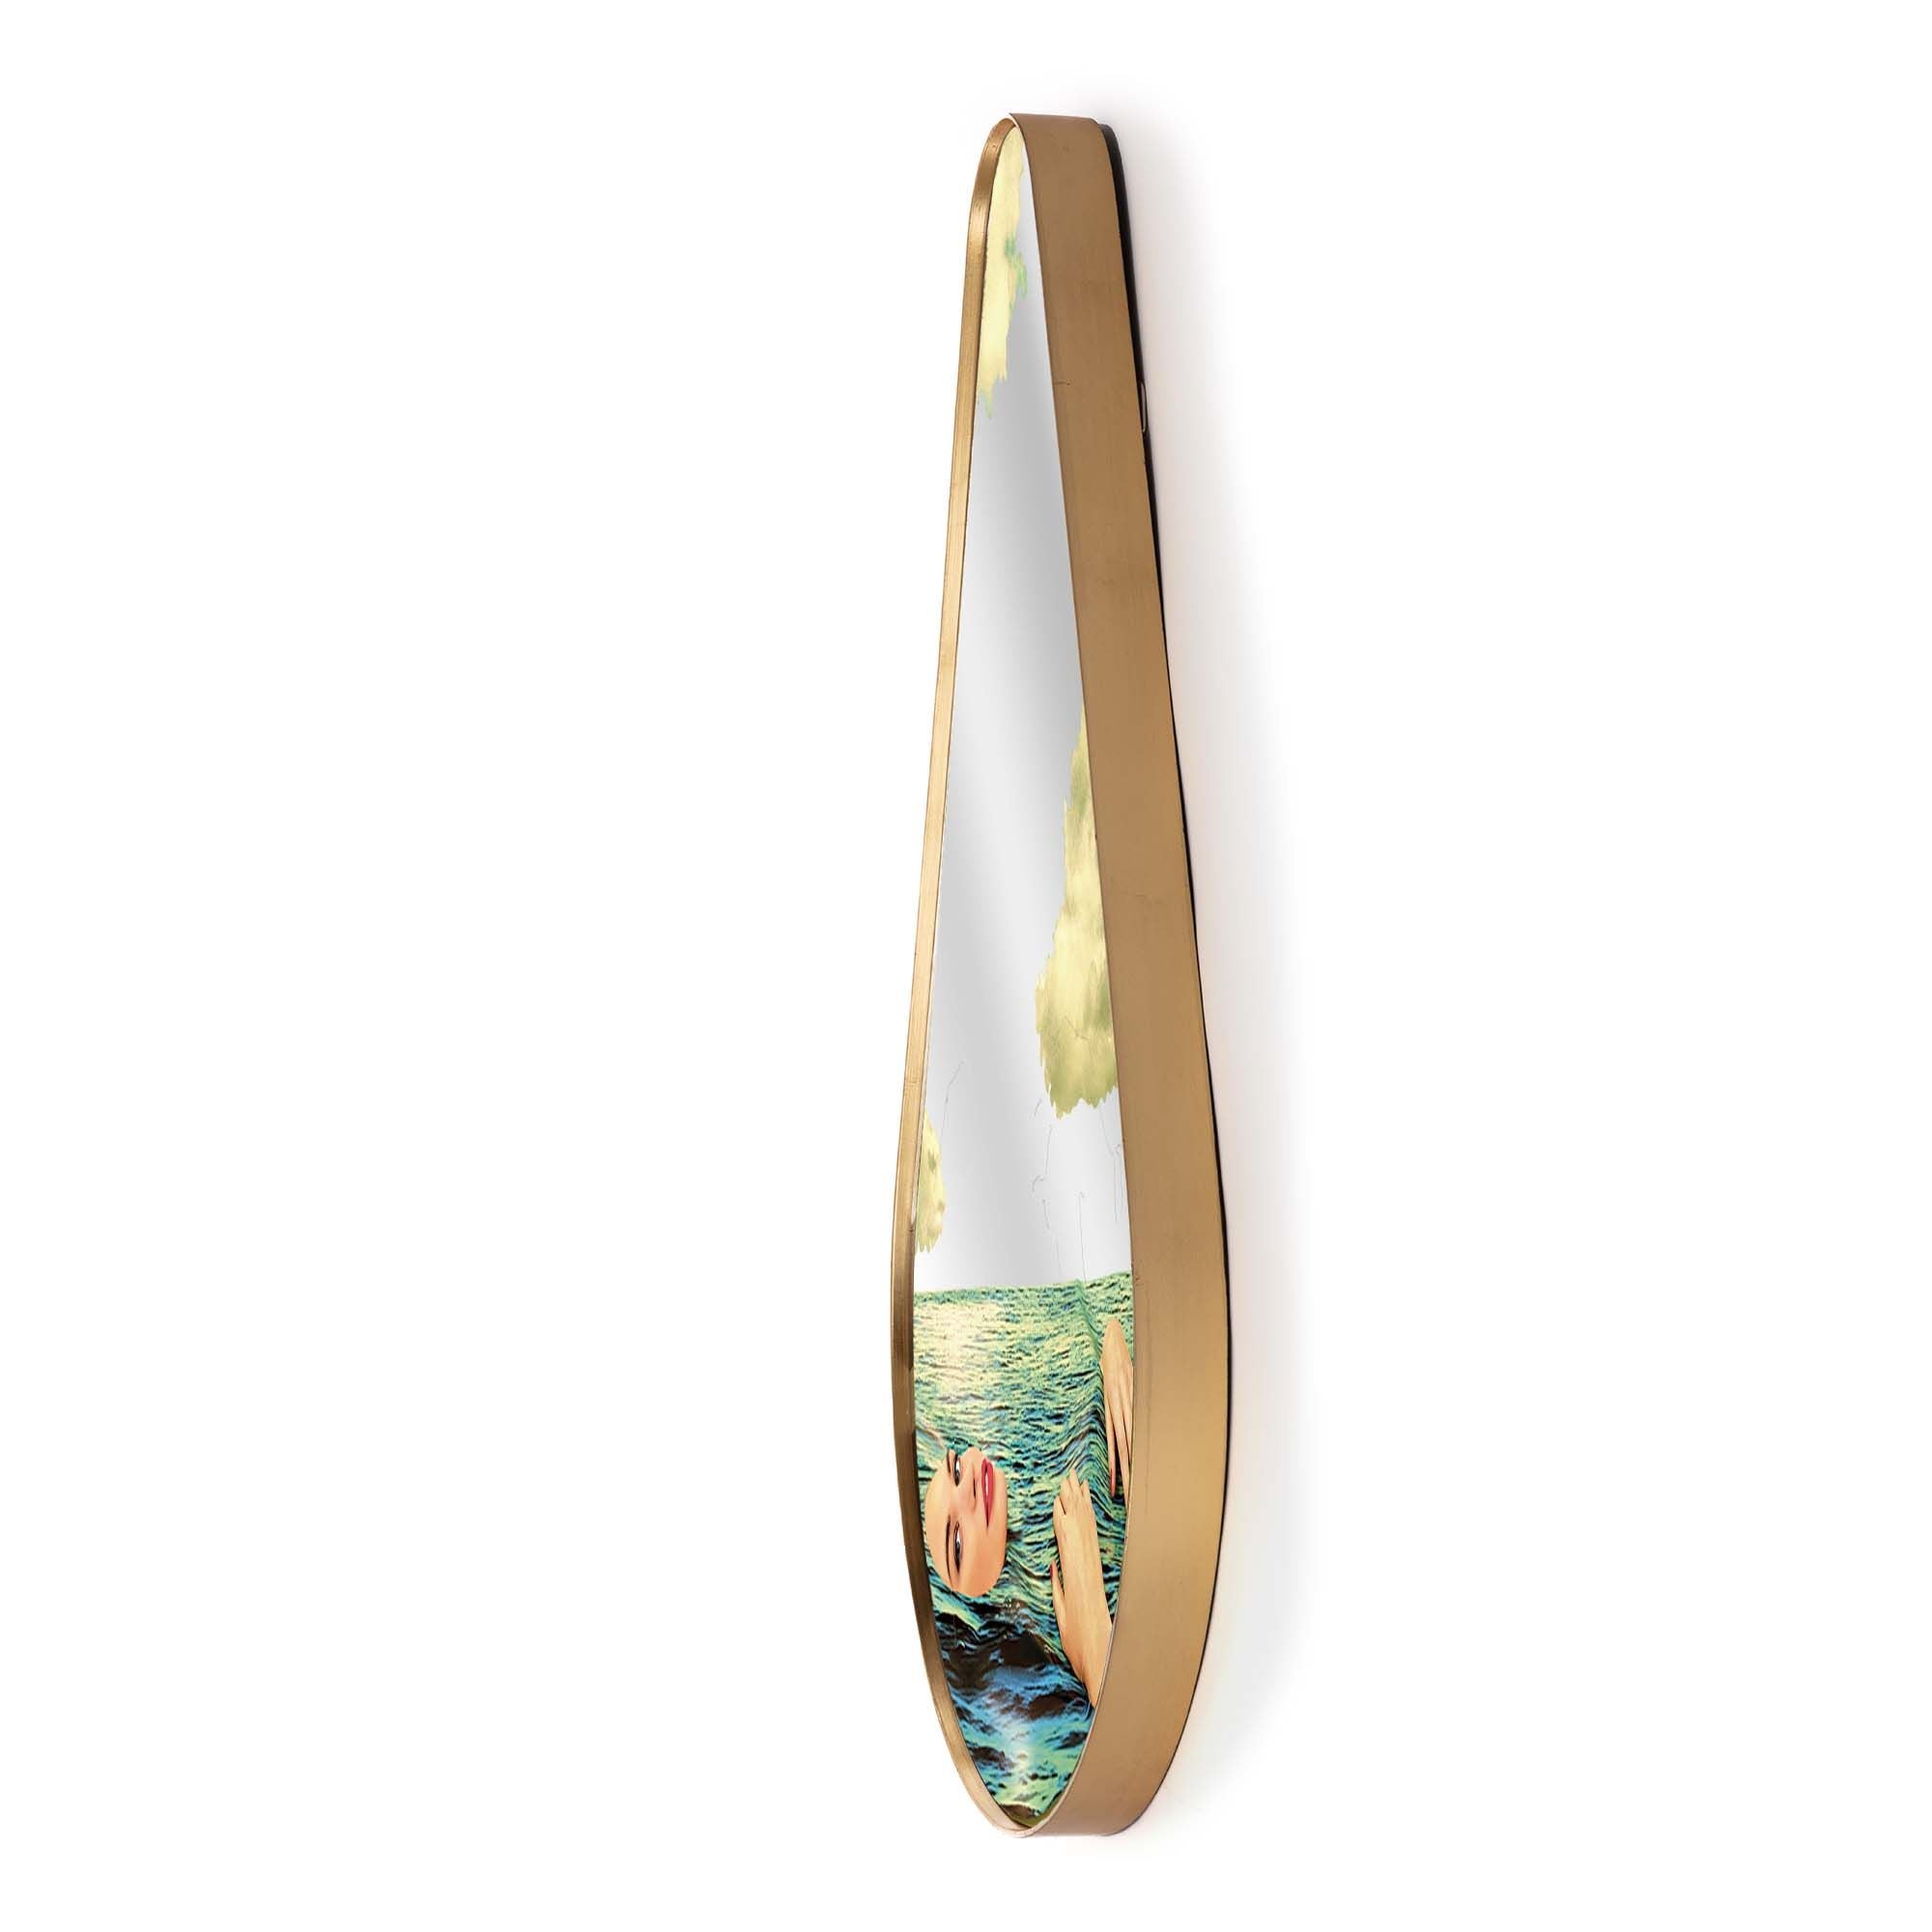 Seletti Toilettpapierspiegel Gold Rahmen Birne, Seagirl